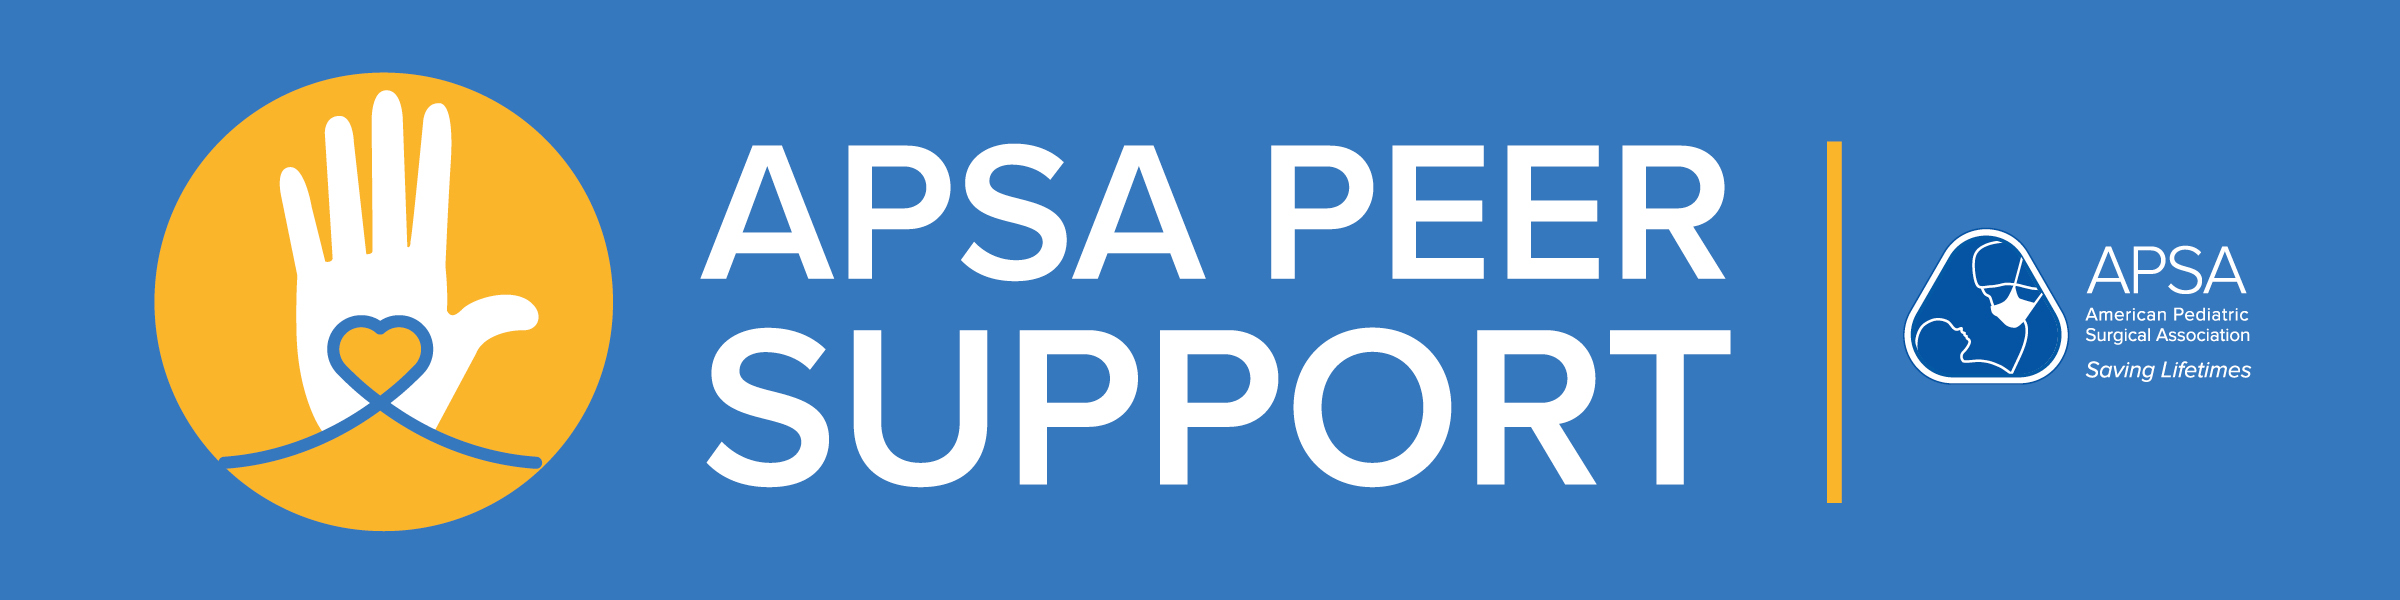 APSA Peer Support Program American Pediatric Surgical Association